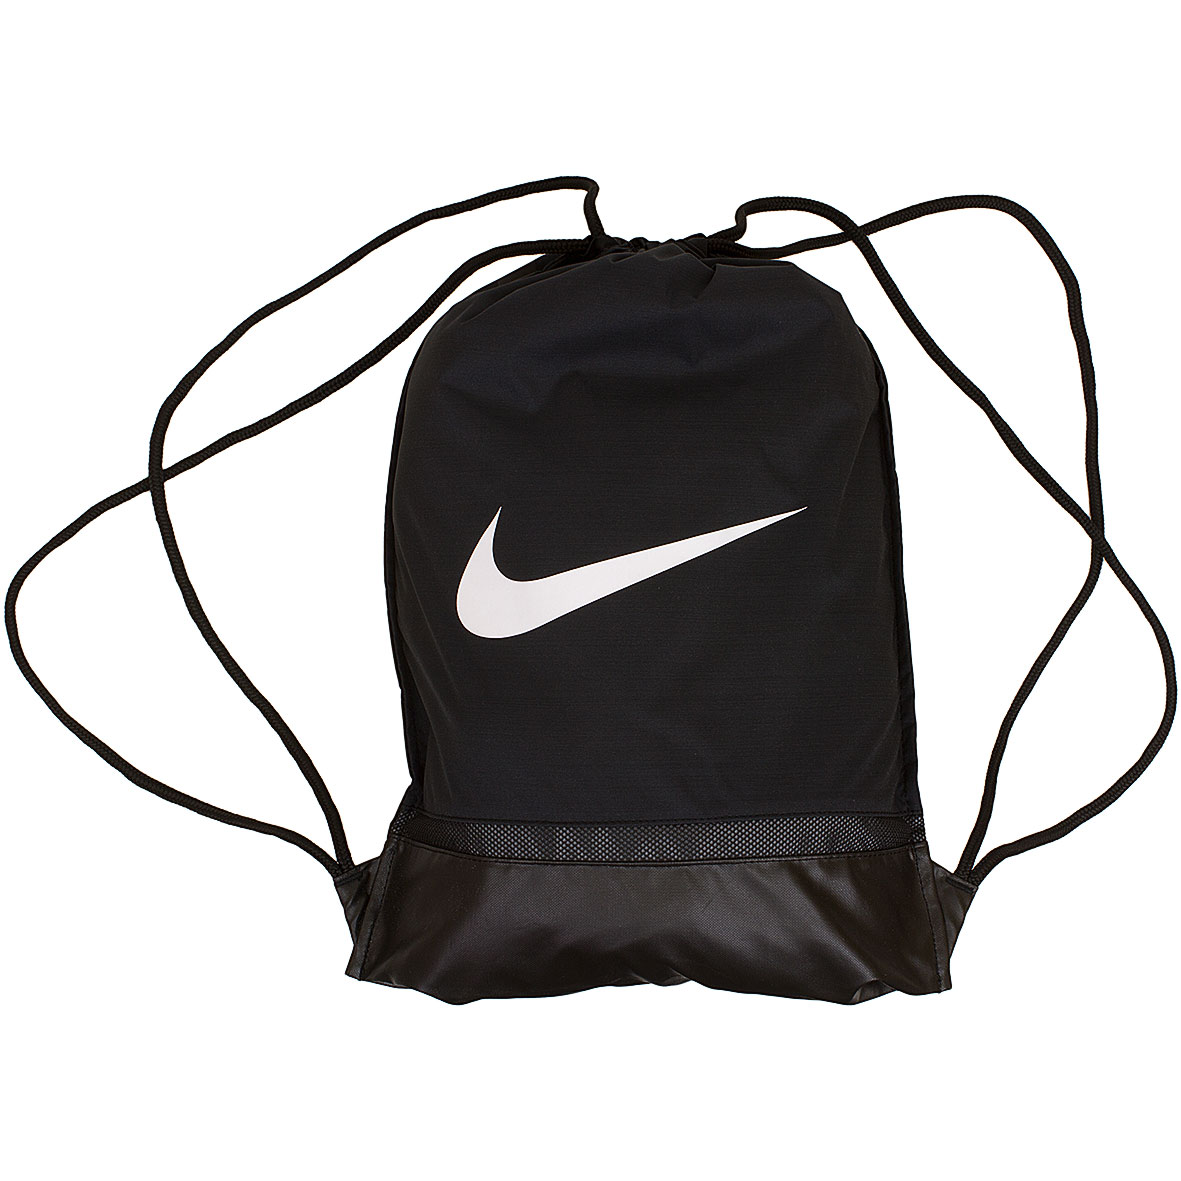 ☆ Nike Gym Bag Brasilia Training Gym schwarz/weiß - hier bestellen!